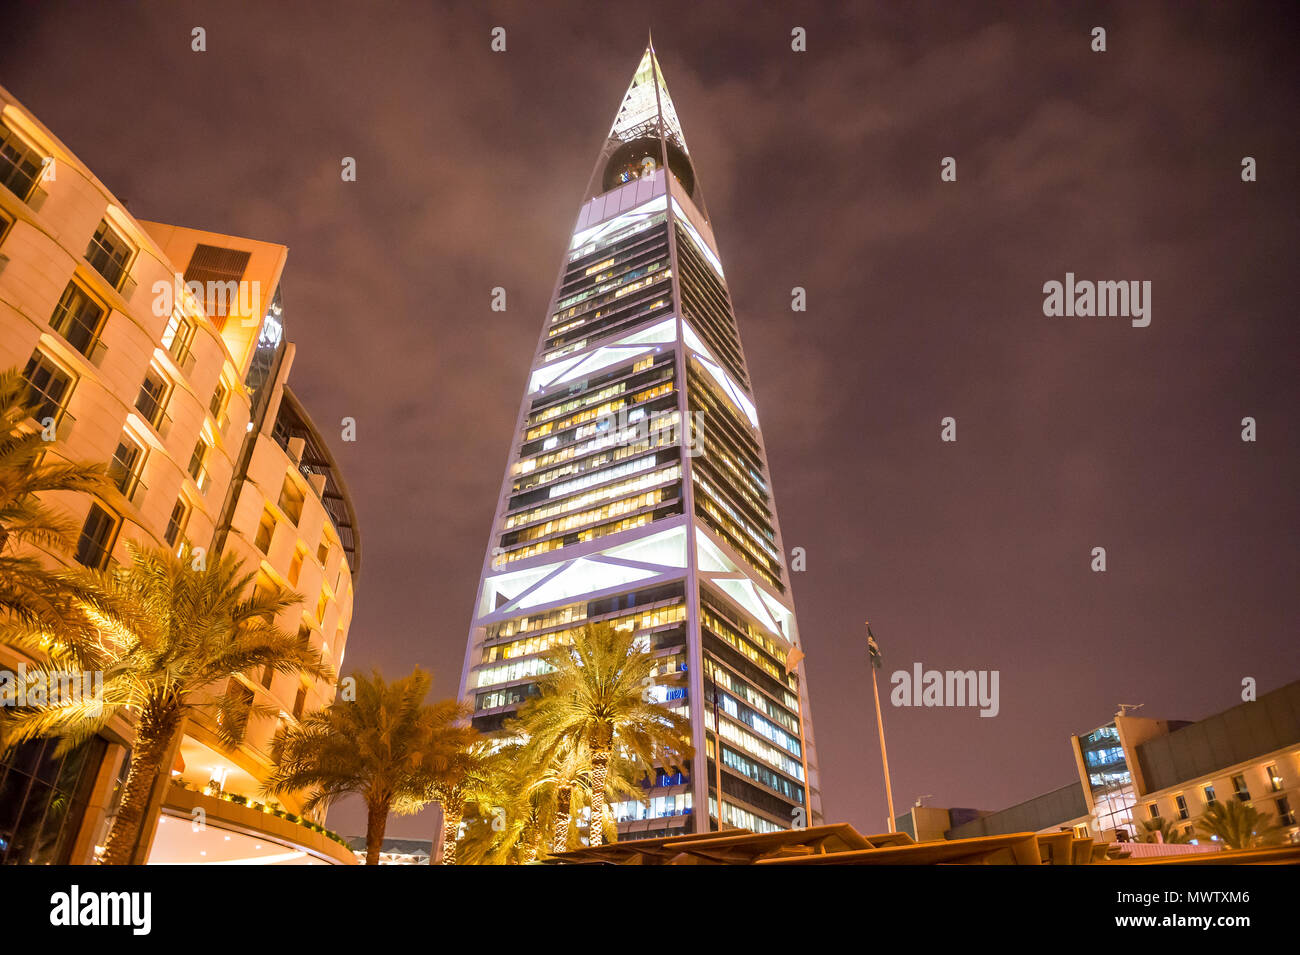 Al Faisaliyah Center Building, Riyadh, Arabie saoudite, Moyen Orient Banque D'Images